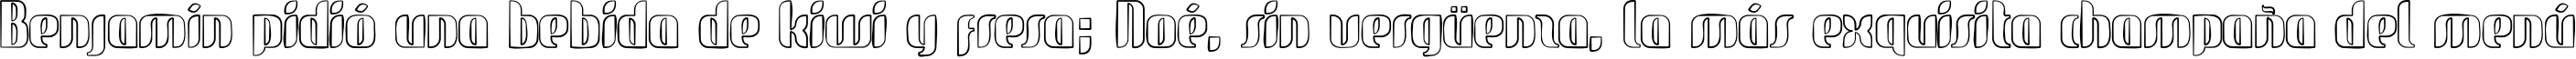 Пример написания шрифтом glide sketch sketch текста на испанском